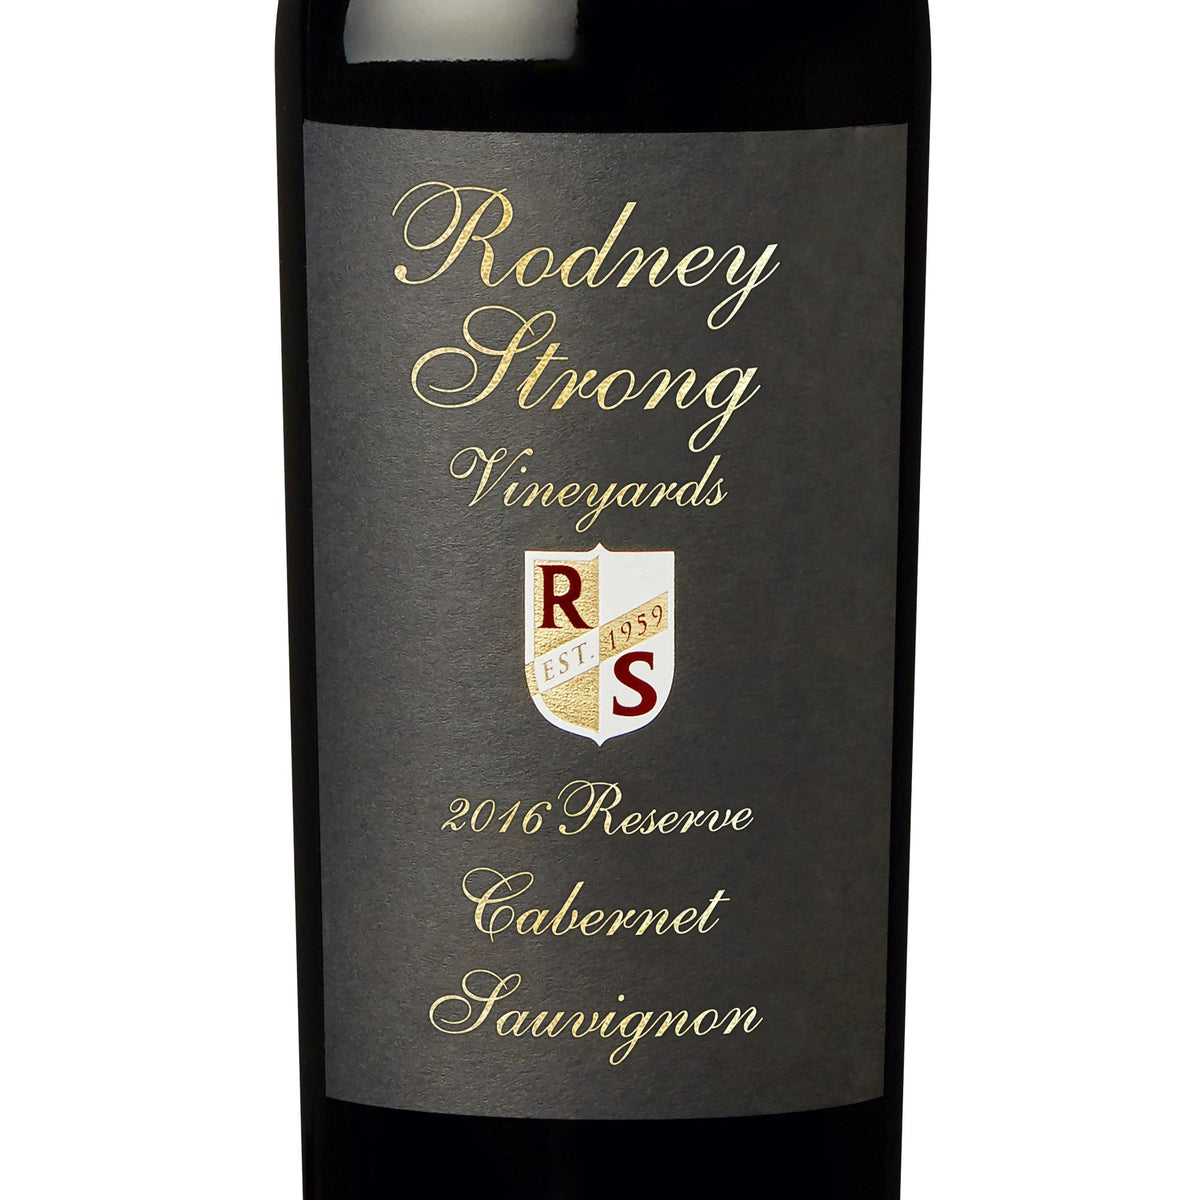 Rodney Strong Vineyards 2016 Reserve Cabernet Sauvignon